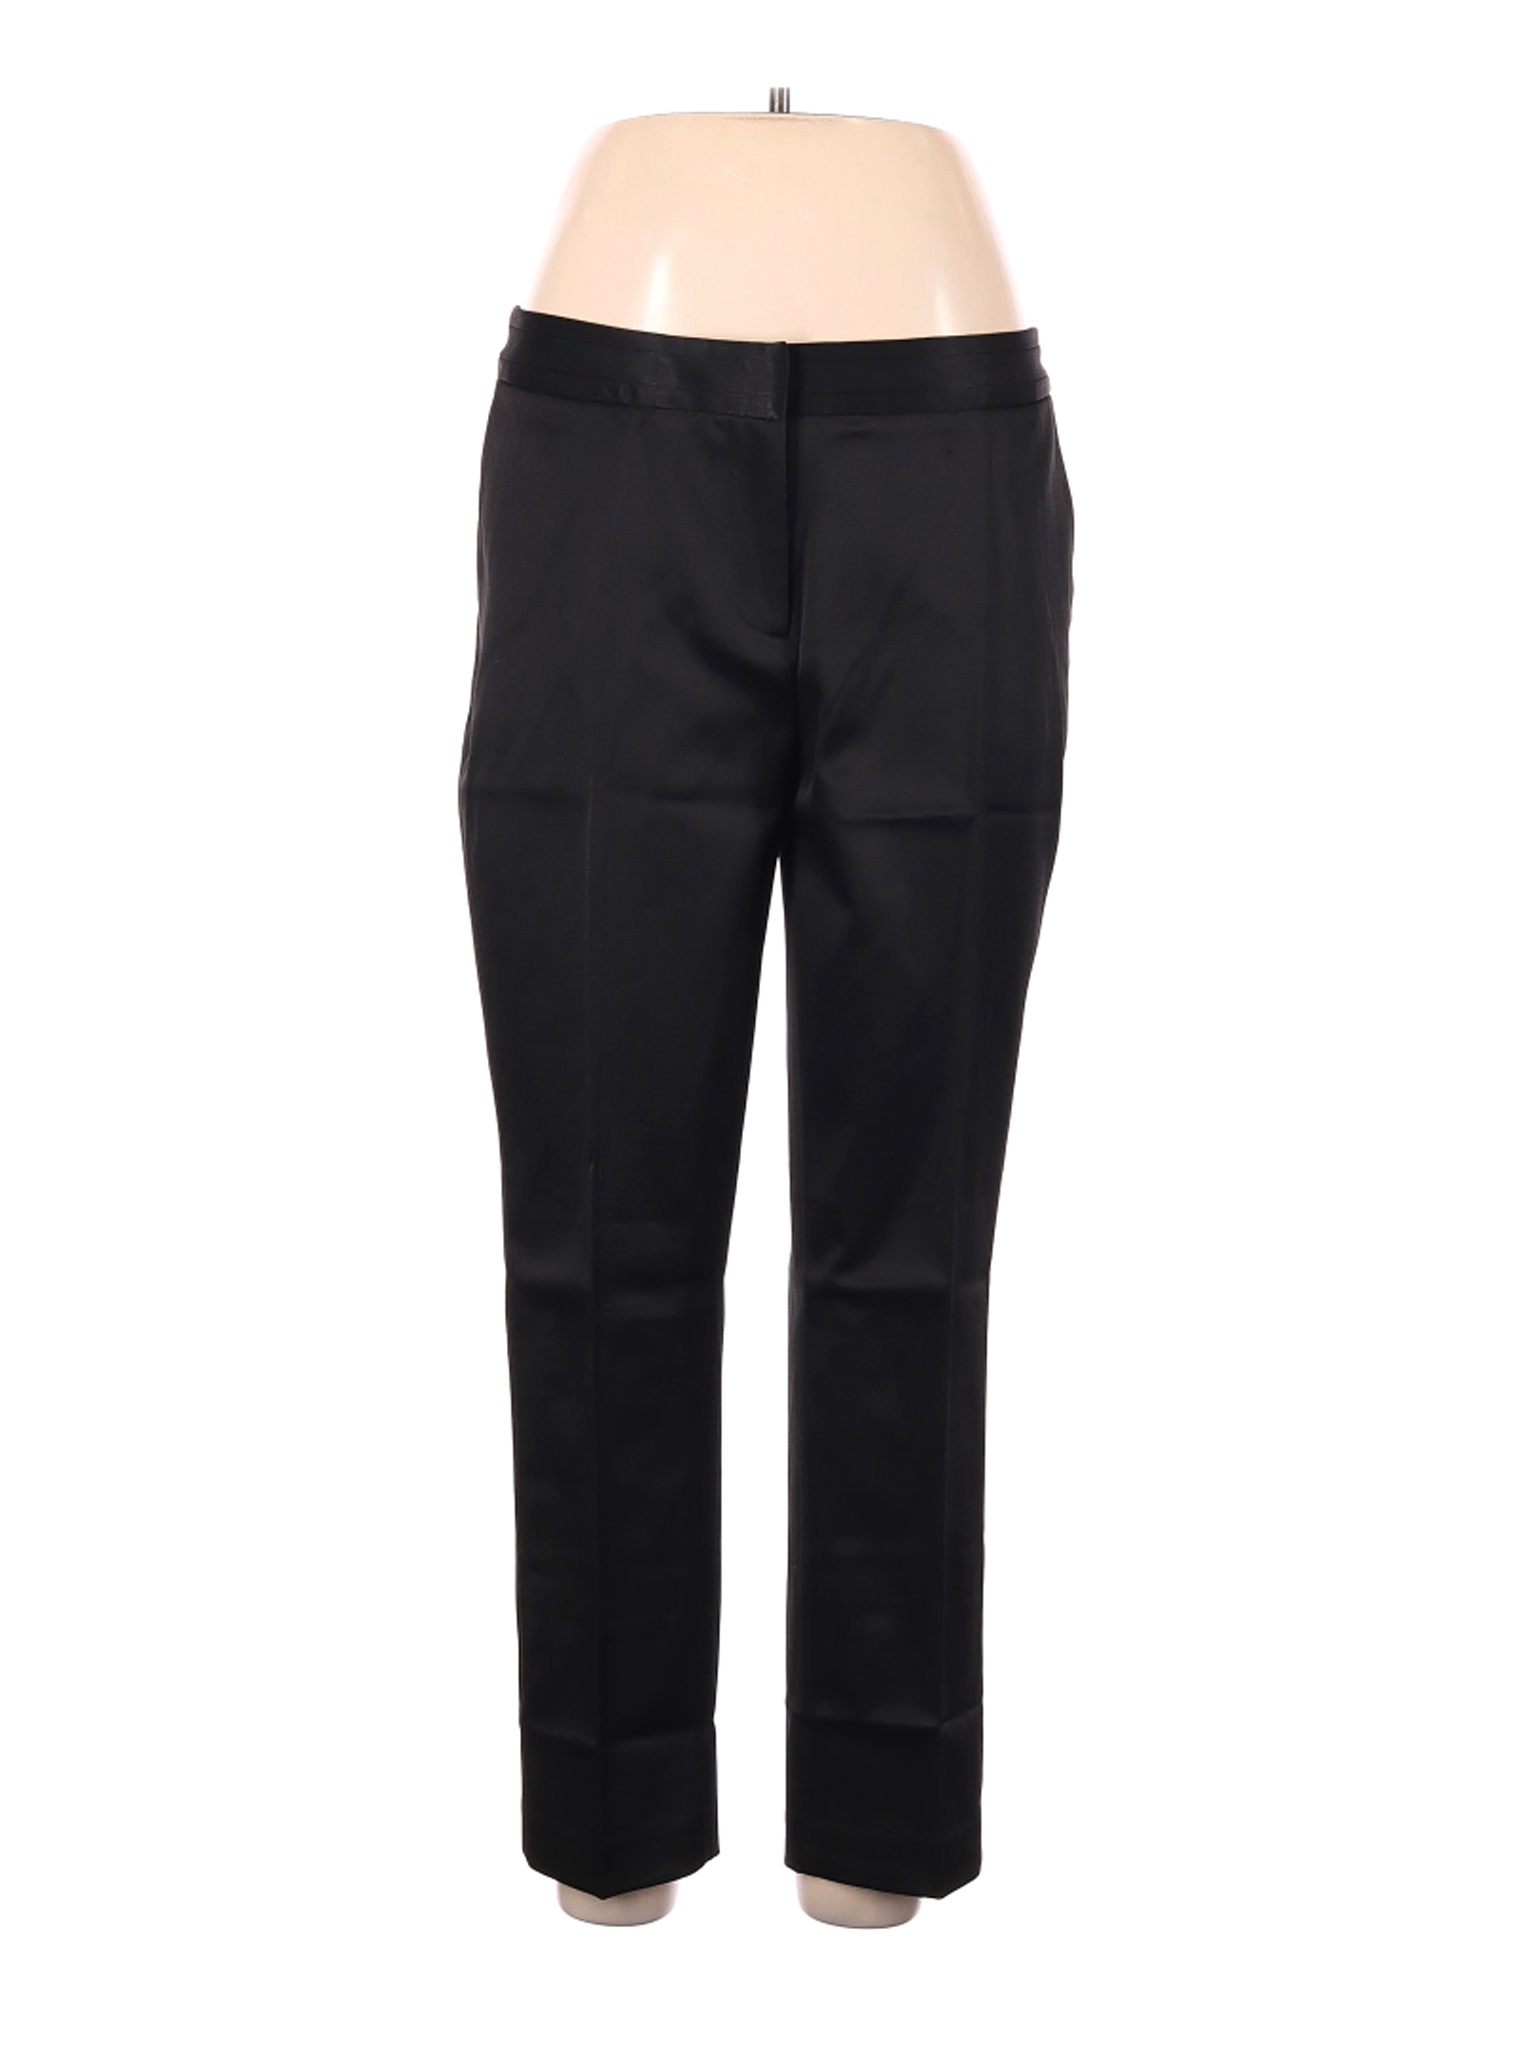 NWT Newport News Women Black Dress Pants 12 | eBay